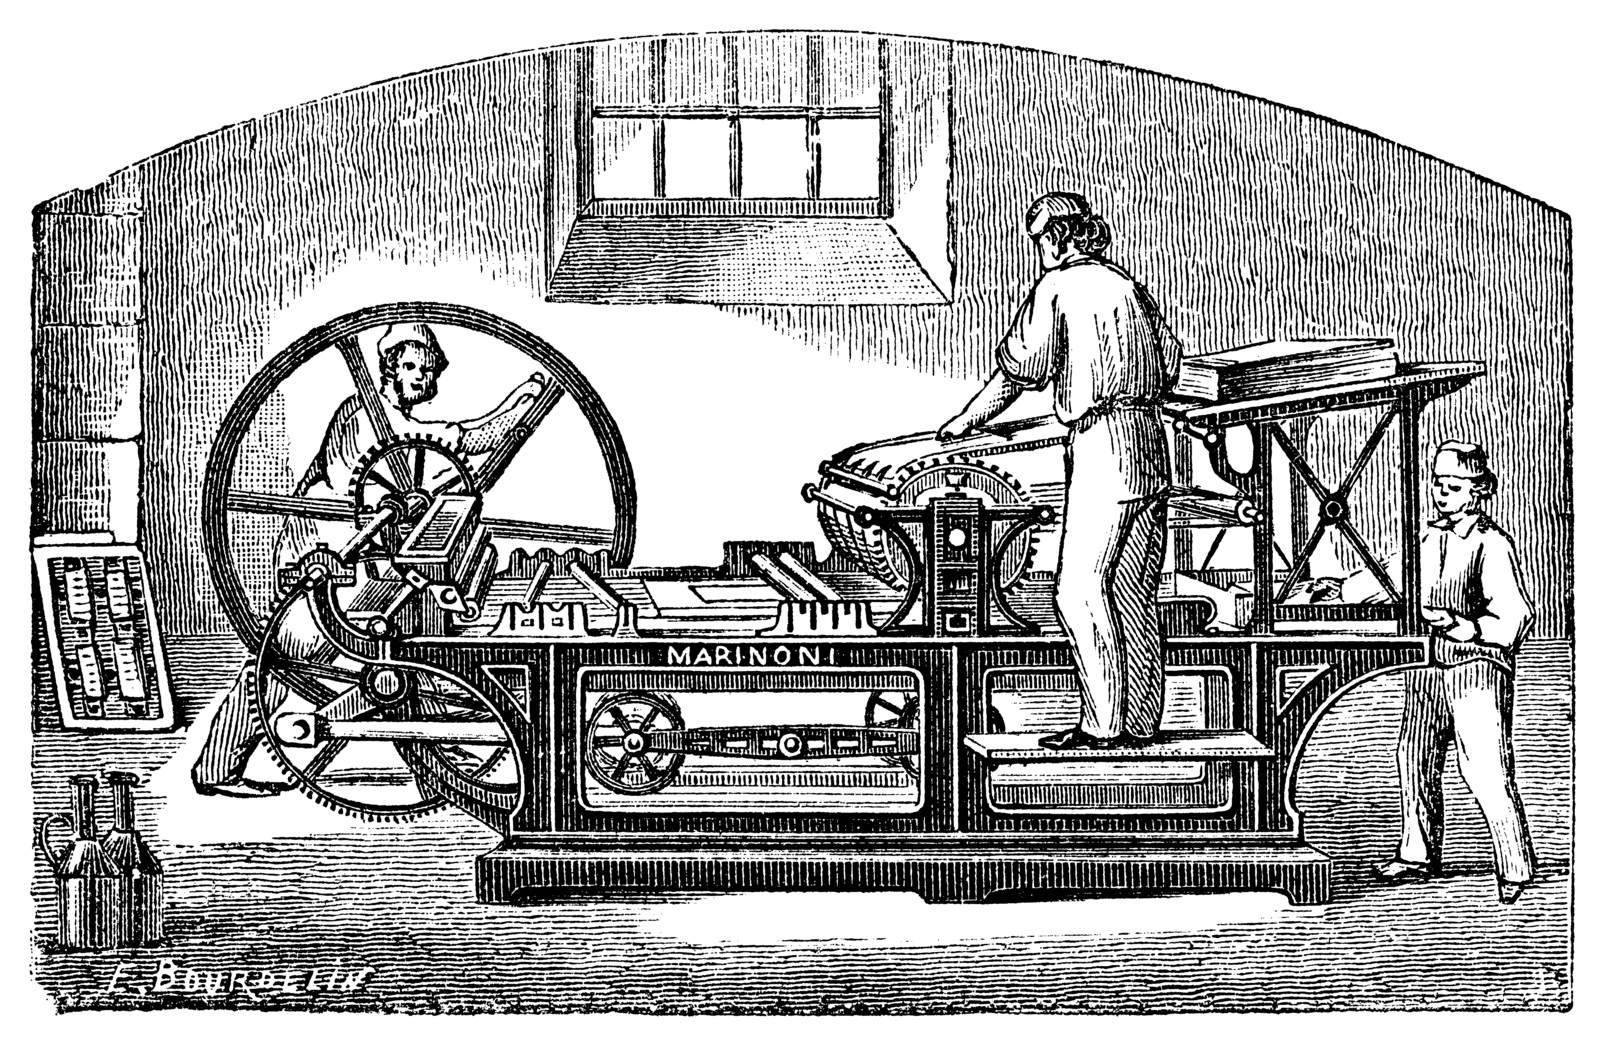 Marinoni printing press, vintage engraving. Old engraved illustration of Marinoni printing press with three workers operating it.